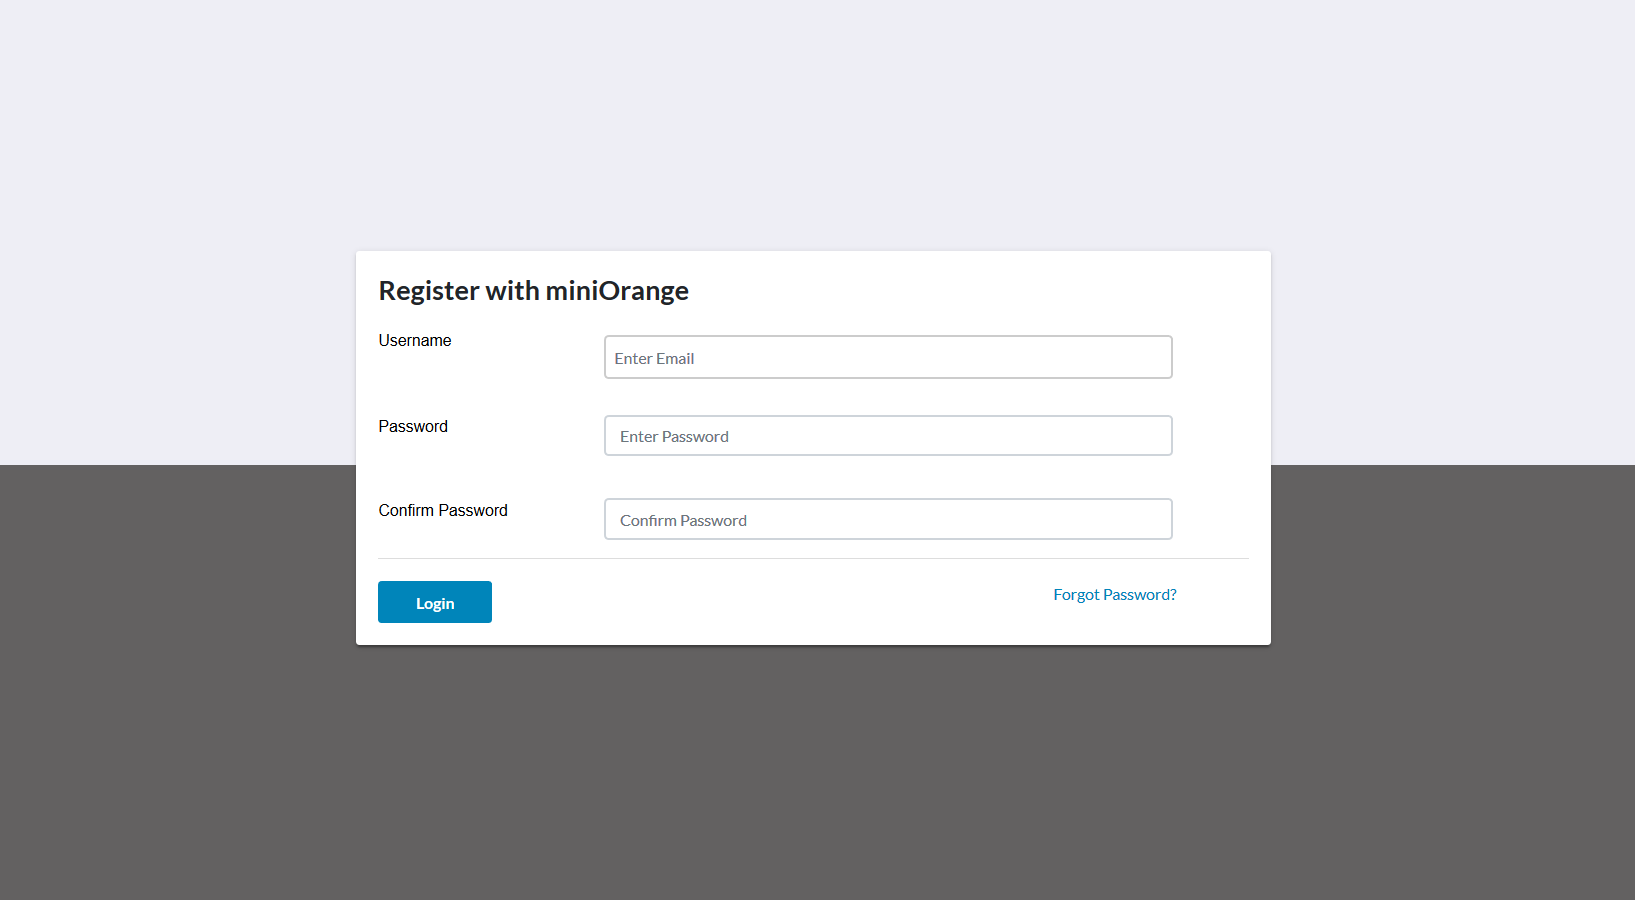 ASP.NET Auth0 SSO - register with miniorange